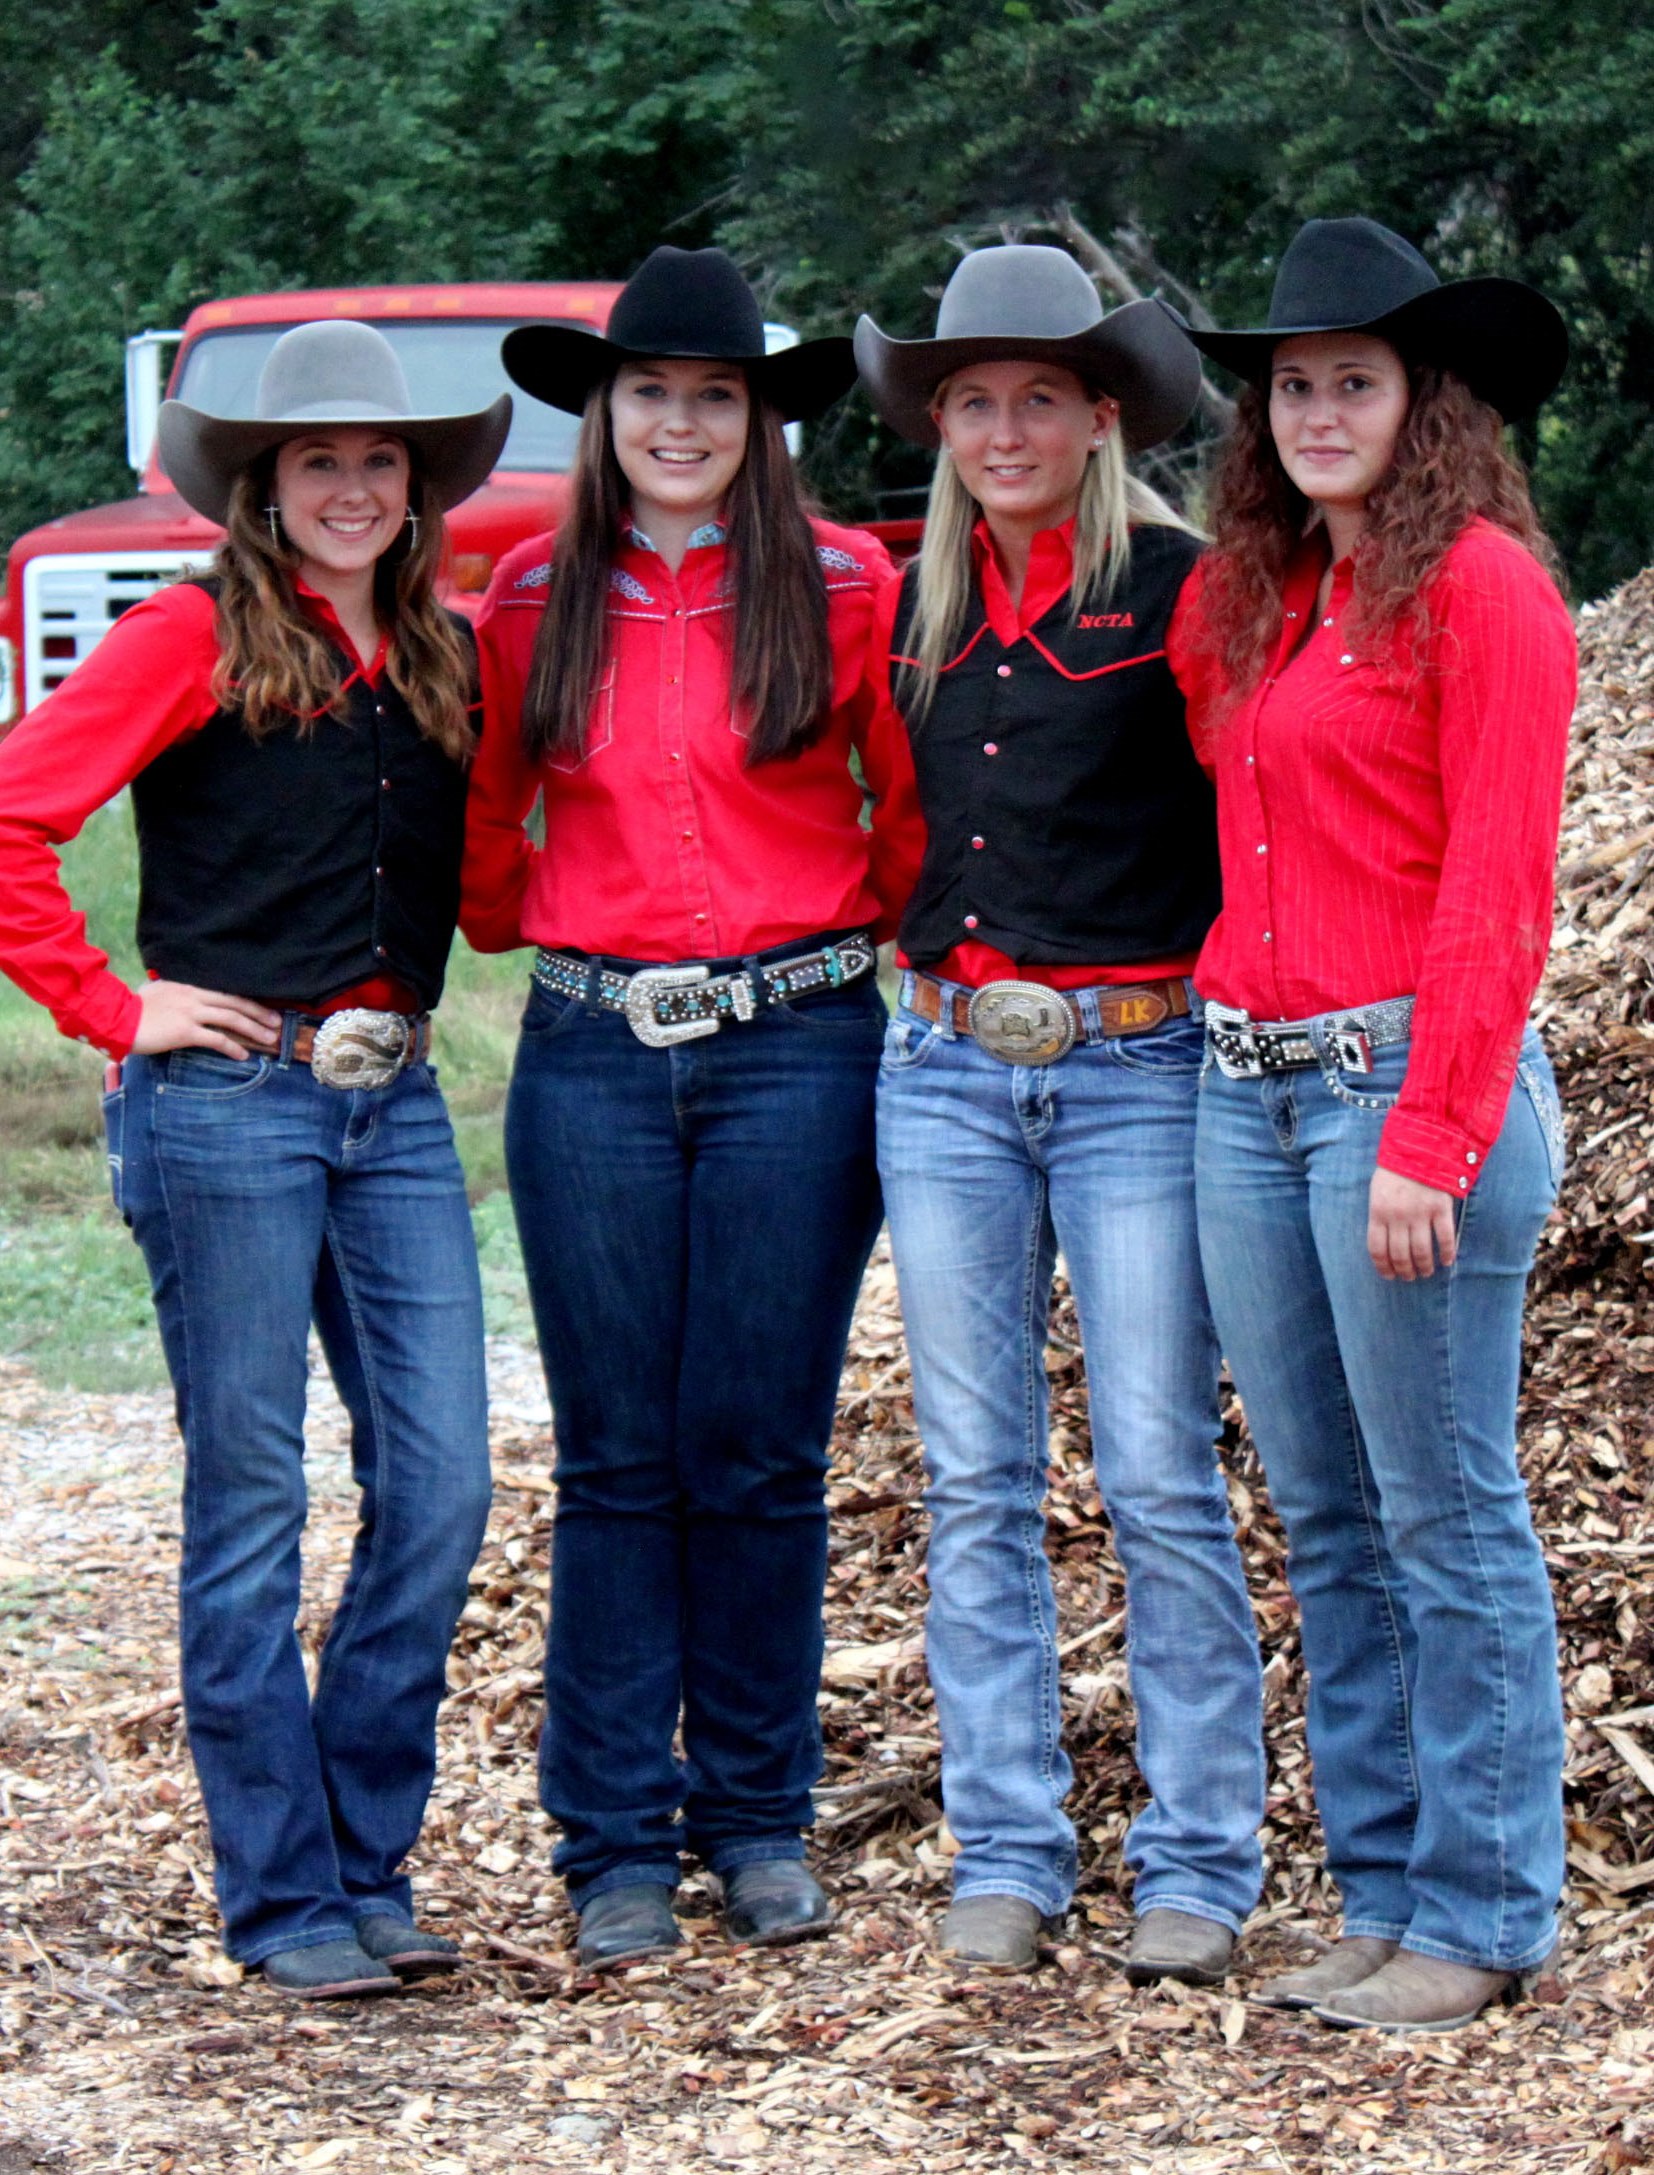 NCTA Aggie Women’s Rodeo Team is in third place of the Great Plains intercollegiate region. Members are Tara Spatz, Trotwood, Ohio; Tryssta Duval, Max; Lexus Kelsch, McLaughlin, S.D., and Erica Mowery, Middleburg, Penn.  (Tori Rossenbach photo)